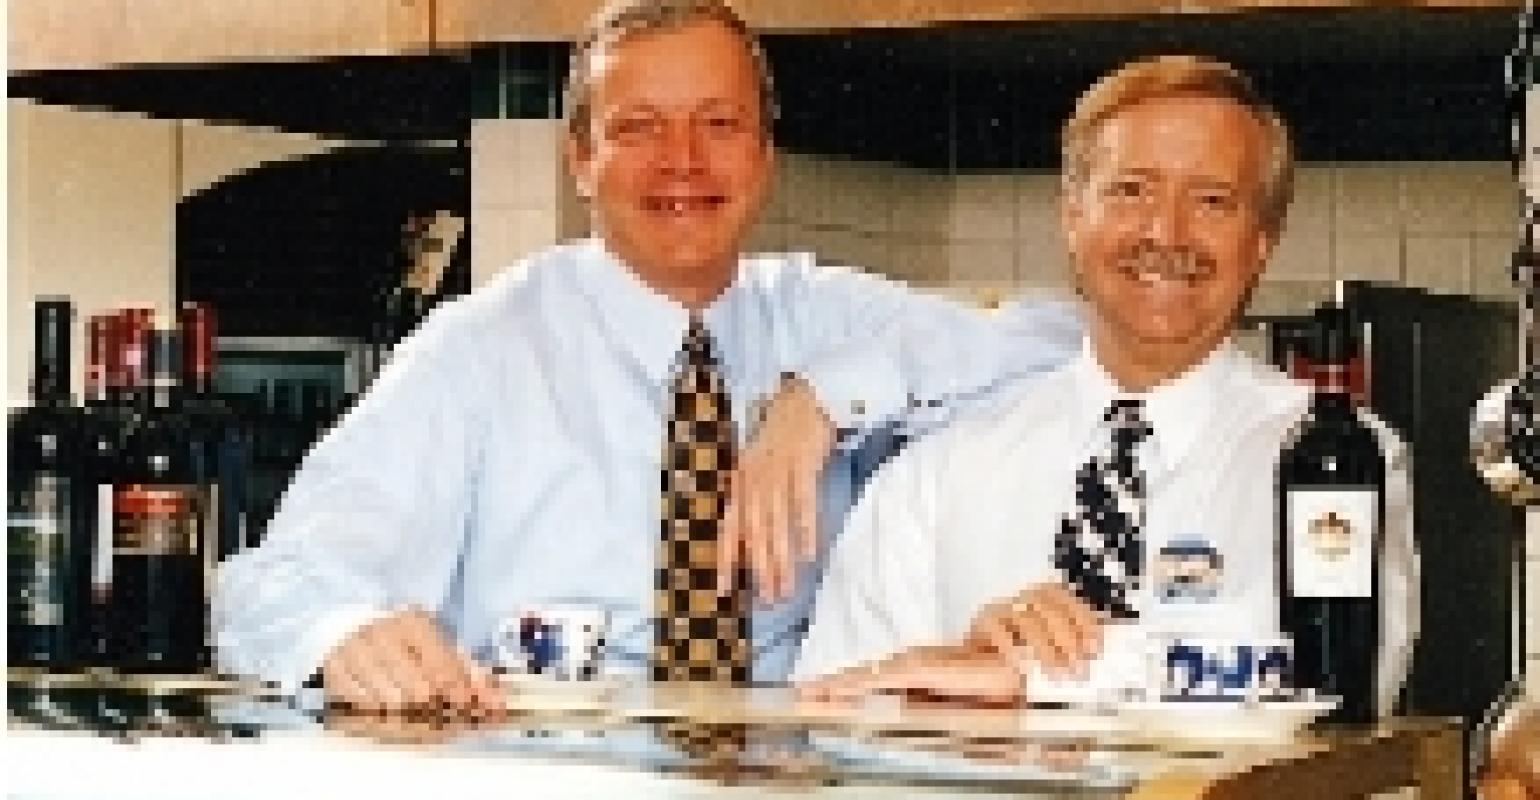 Brad Blum And Bob Mock President And Executive Vice President